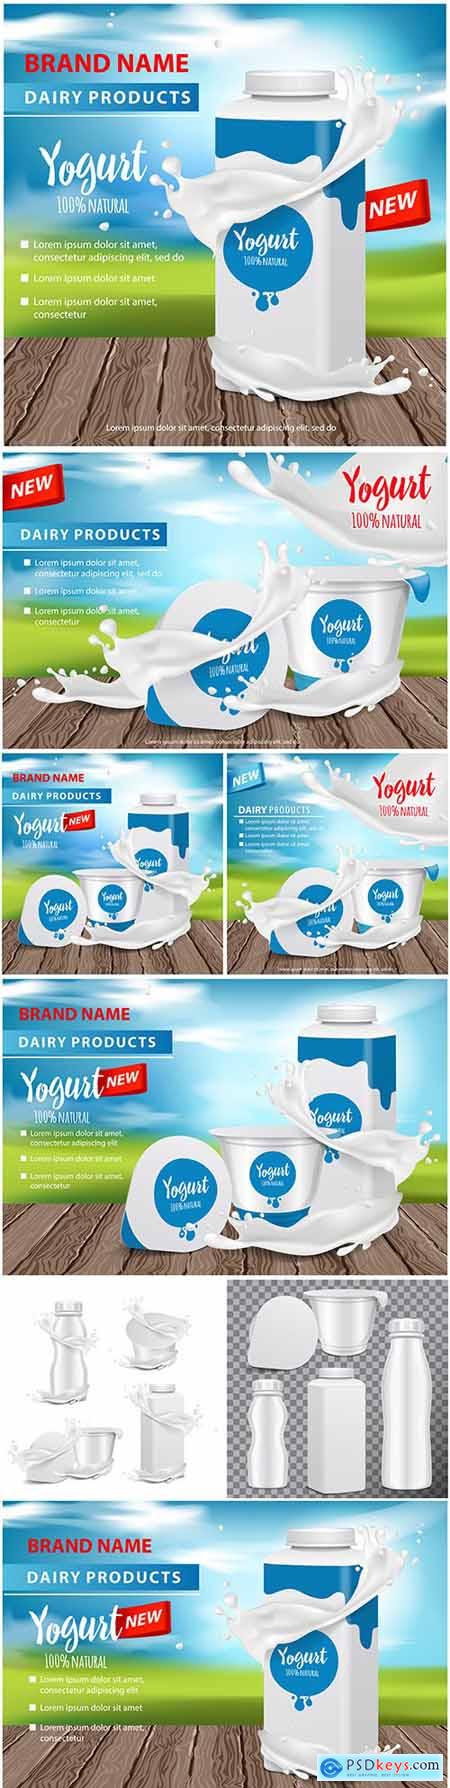 Advertising yogurt for magazine bottle with splash illustration